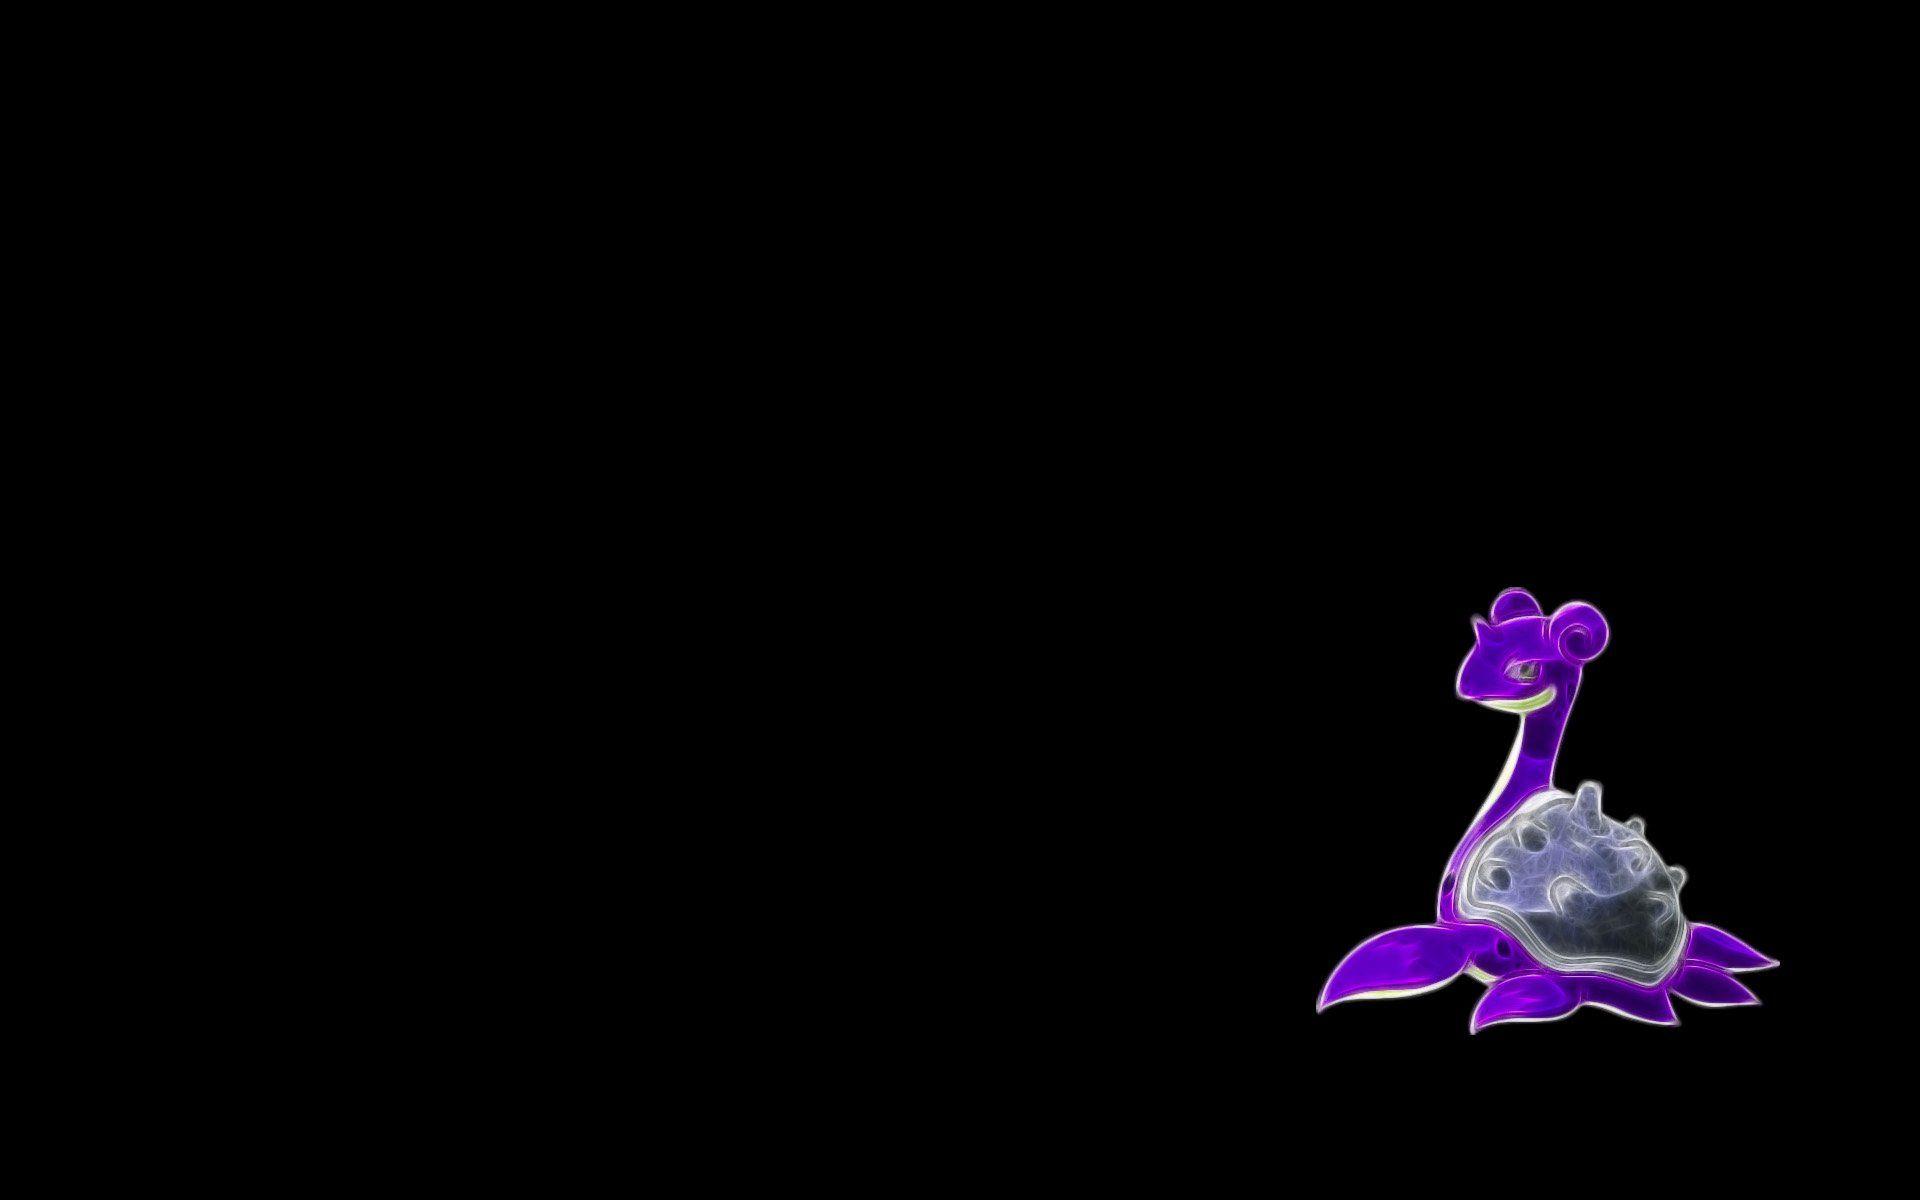 Lapras (Pokémon) HD Wallpaper and Background Image